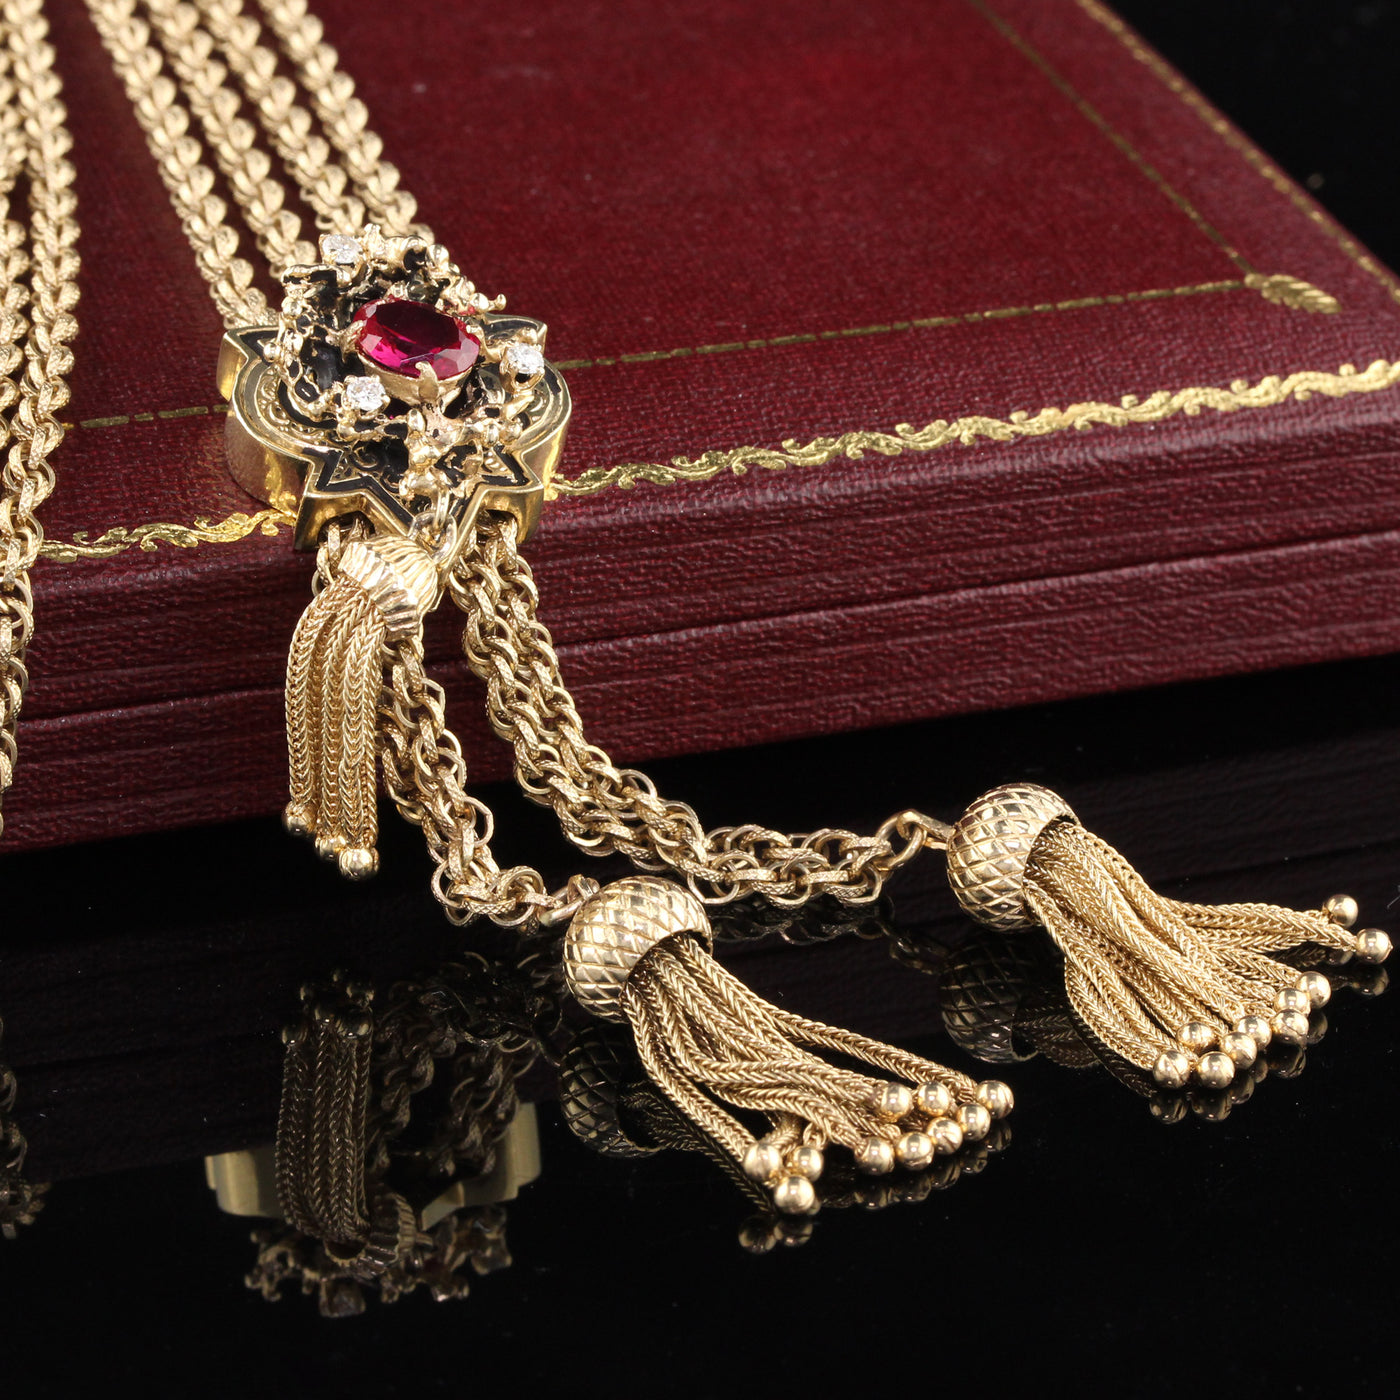 Victorian 14K Yellow Gold Diamond Necklace - The Antique Parlour